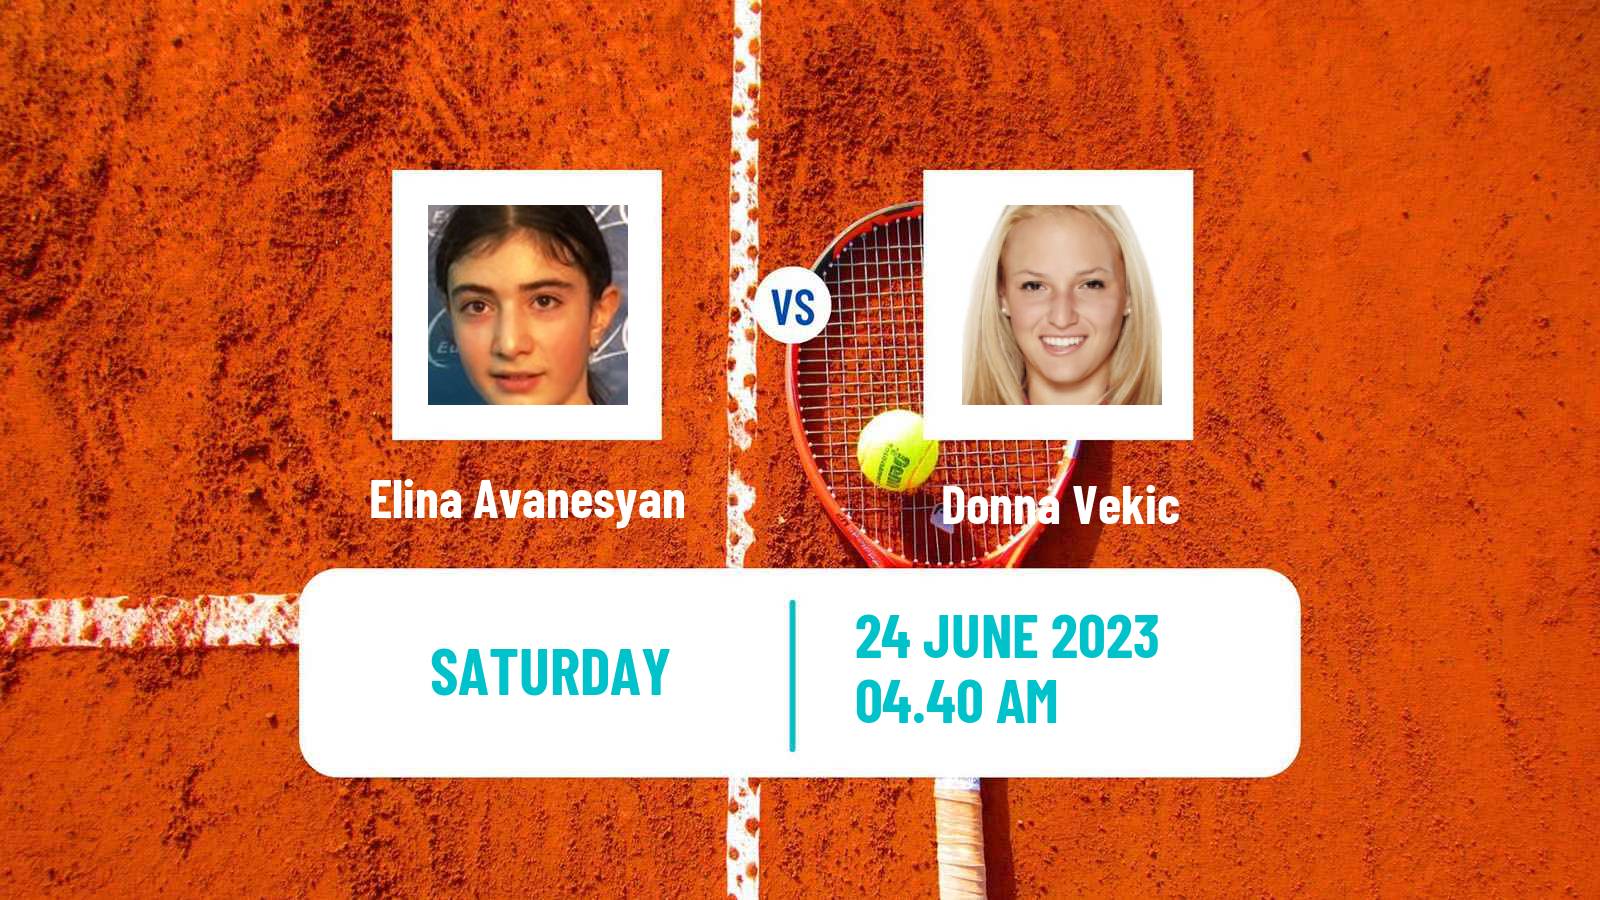 Tennis WTA Berlin Elina Avanesyan - Donna Vekic